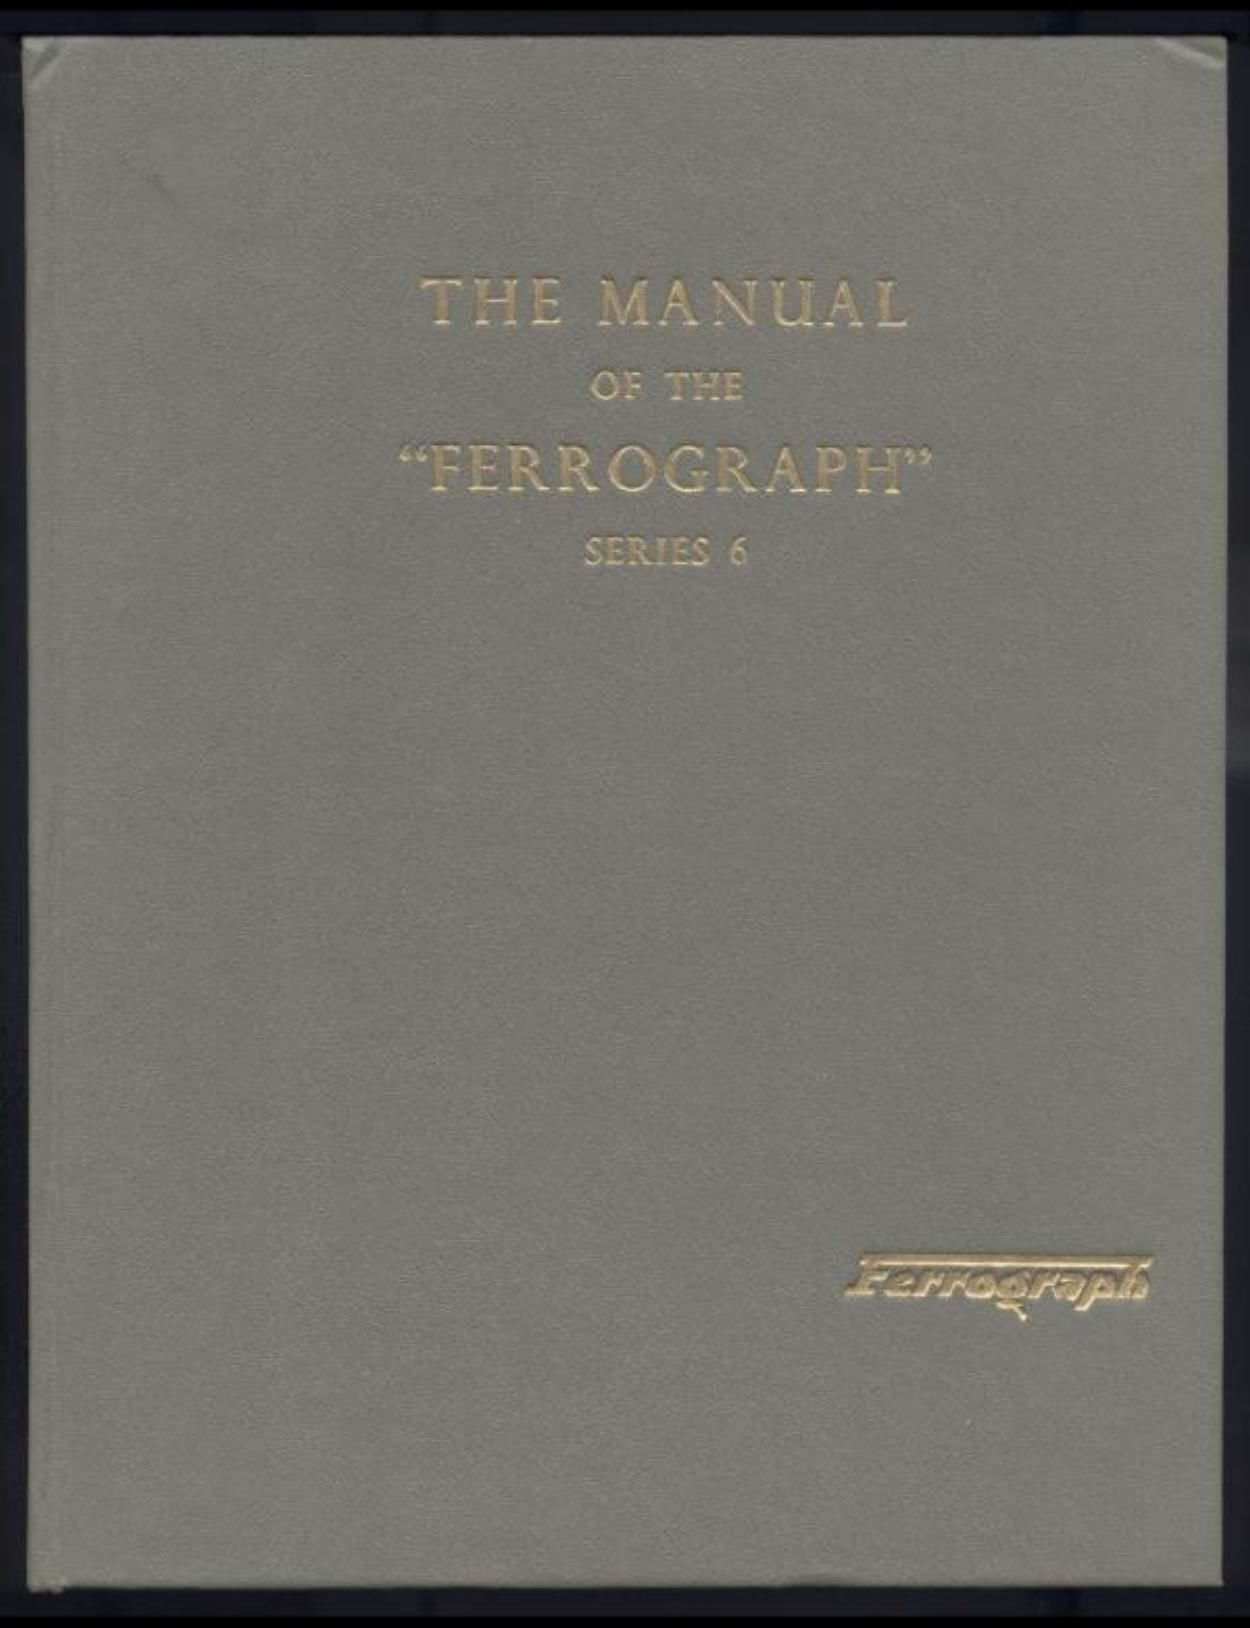 Ferrograph 631 Owners Manual